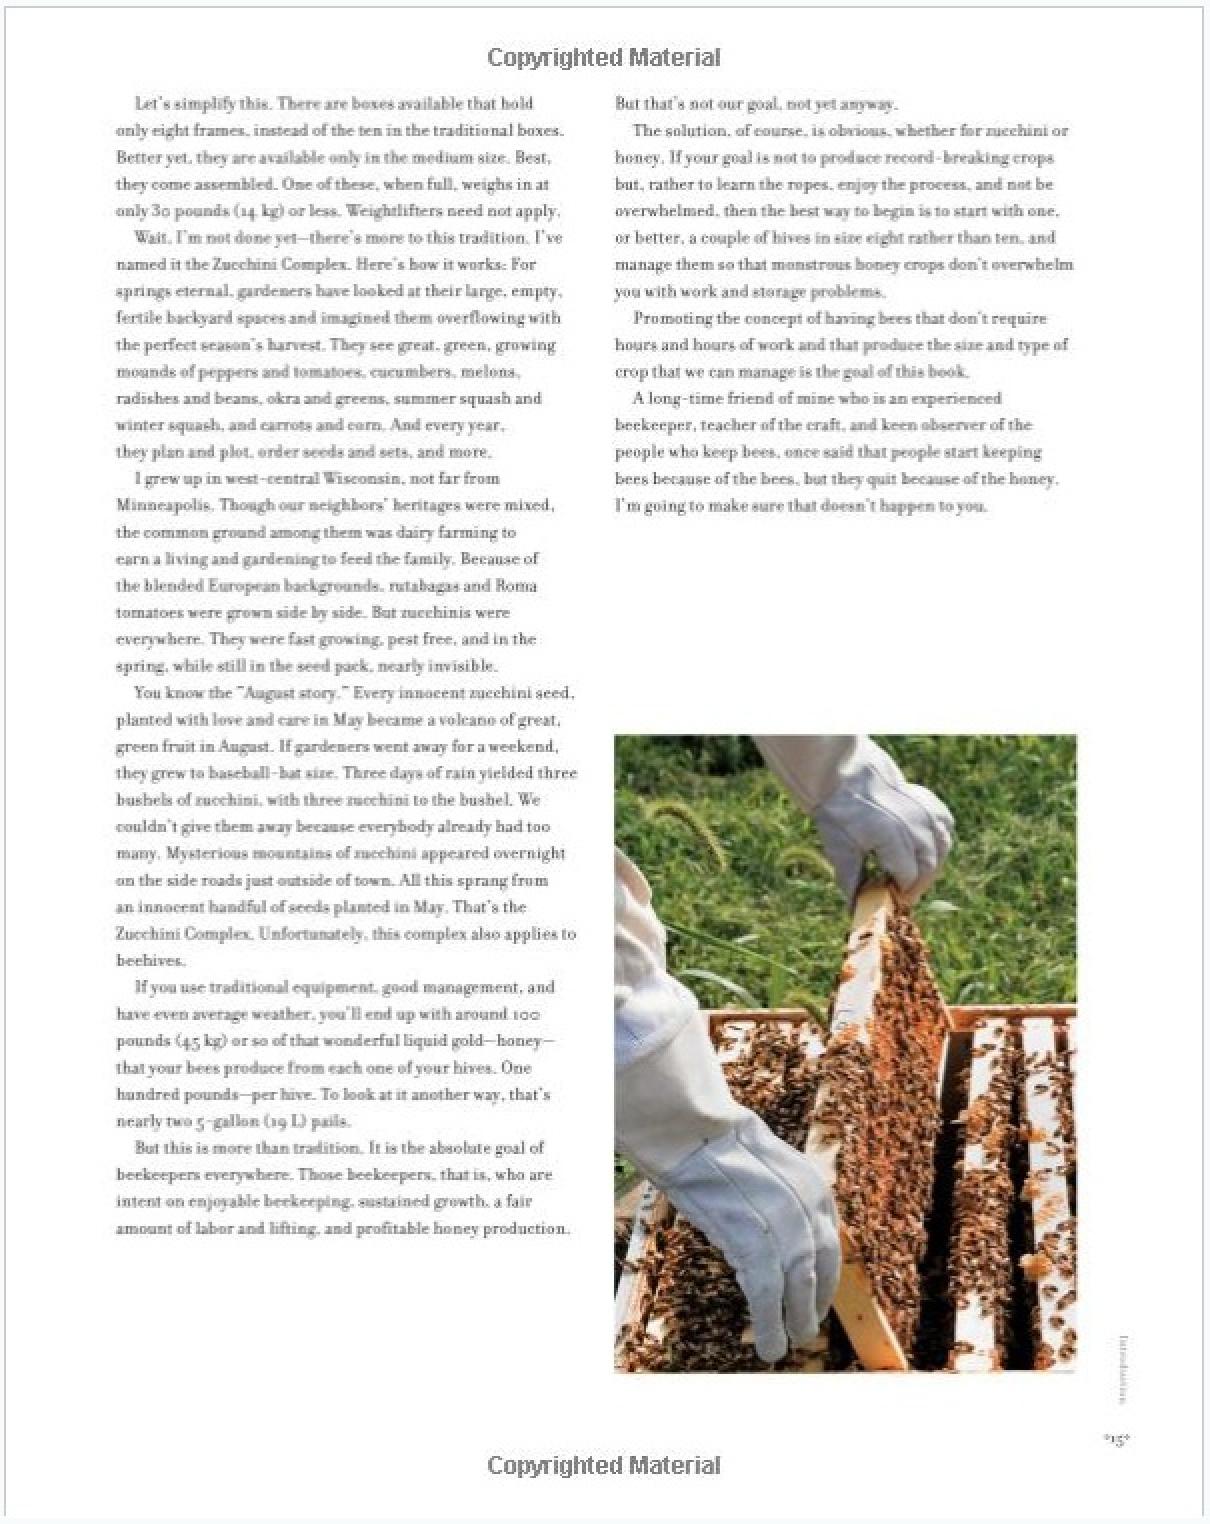 Backyard Beekeeper Introduction History Page 3